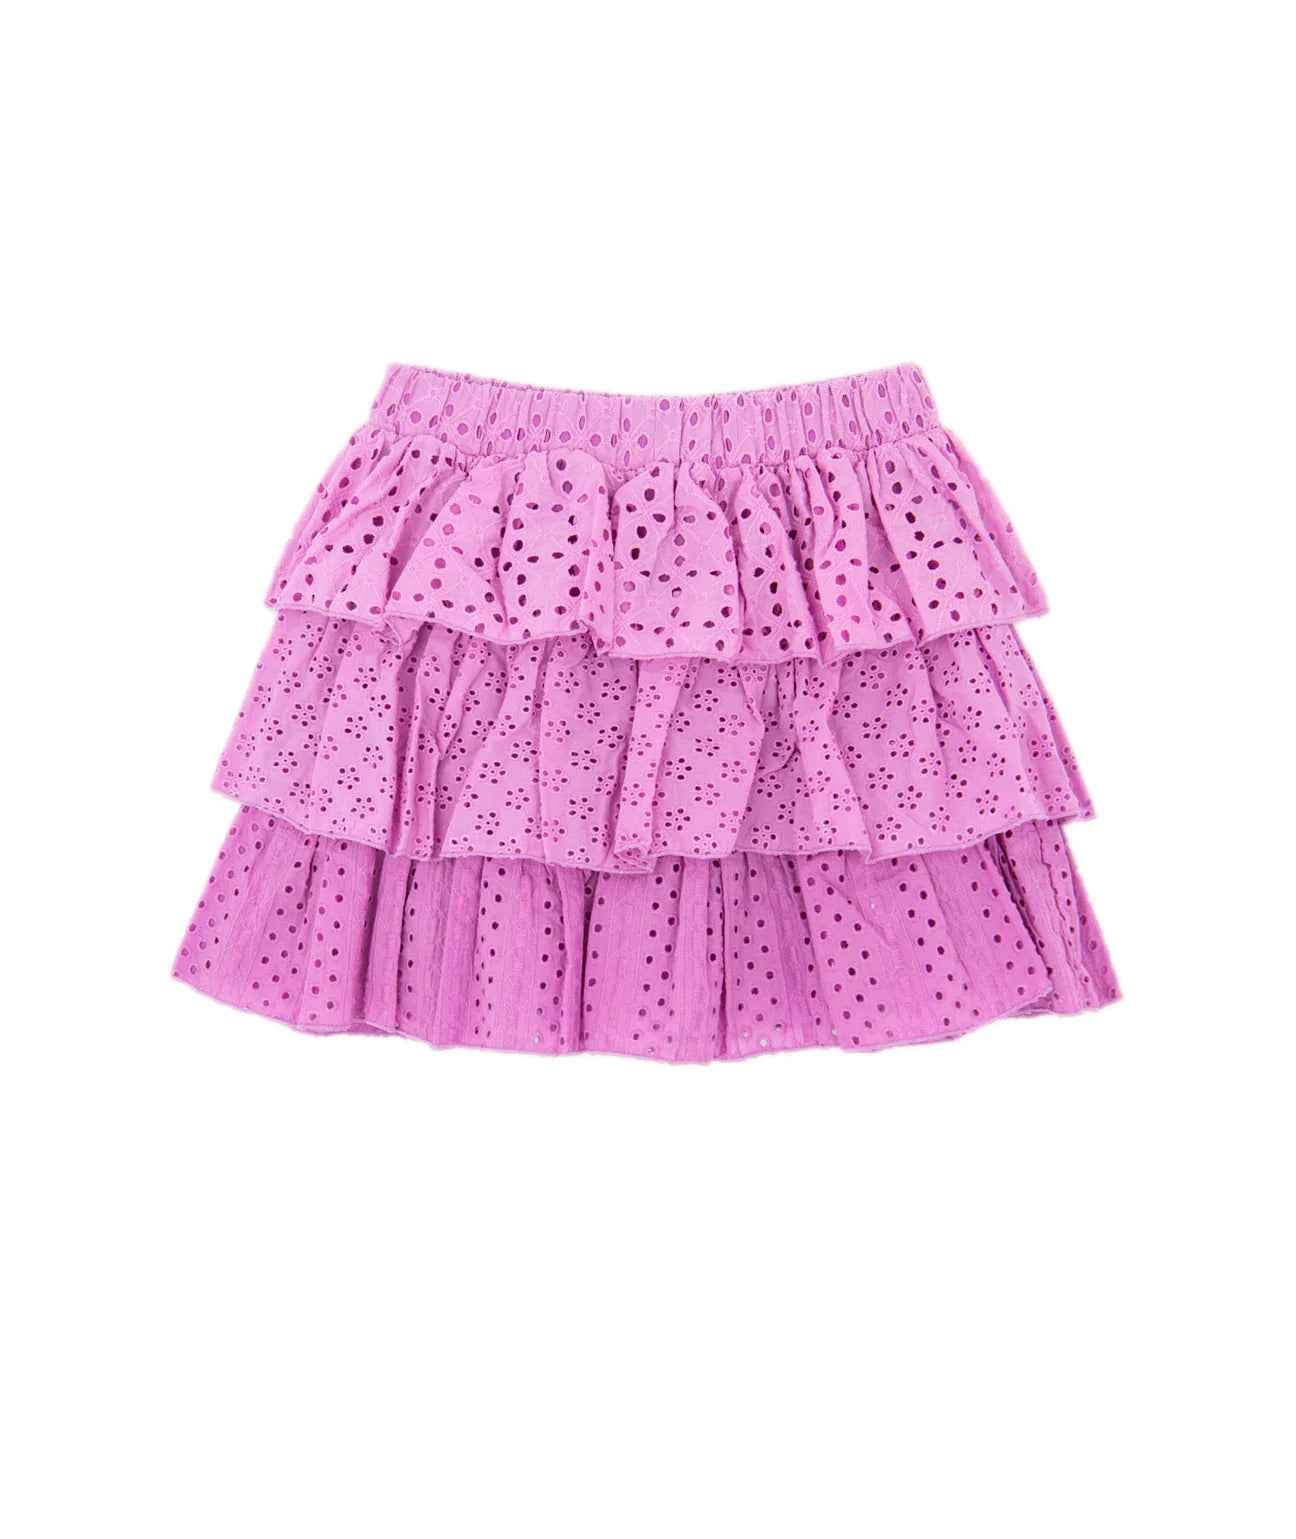 Flowers by Zoe - Pink Eyelet Ruffle Skirt